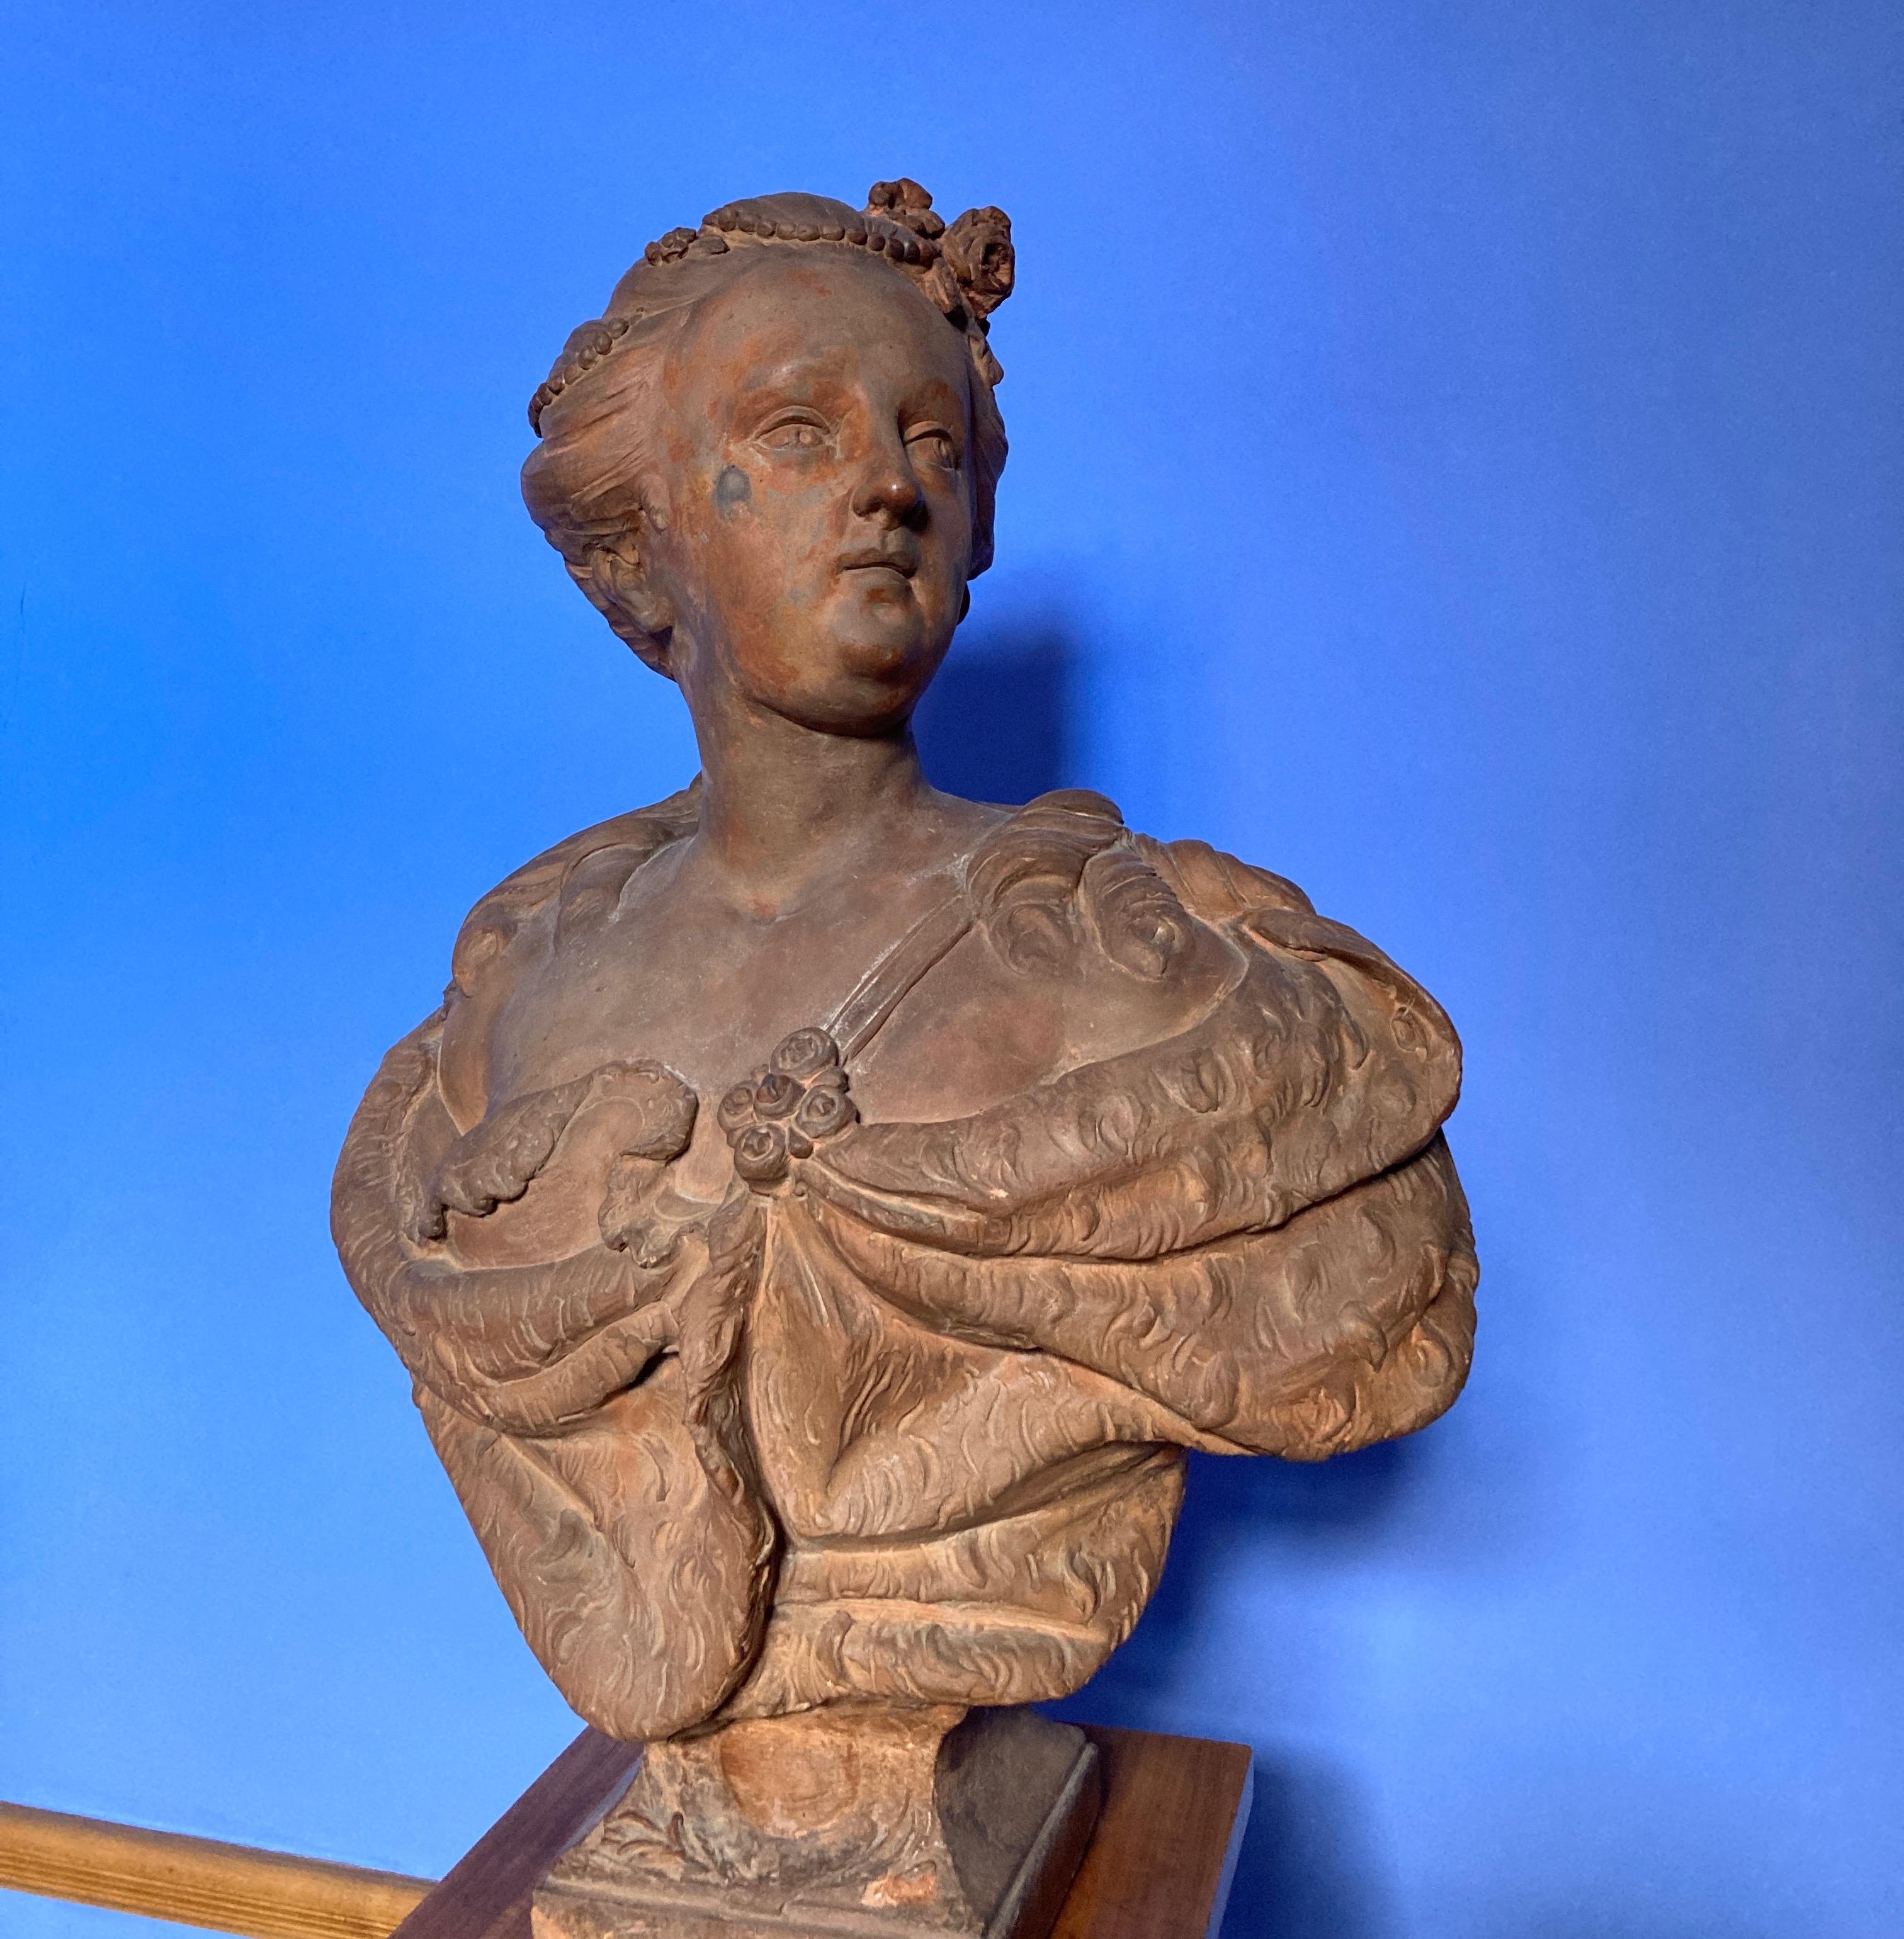 Bust of a Lady, prob Queen Elisabeth Petrowna, Terracotta Sculpture, Baroque Art